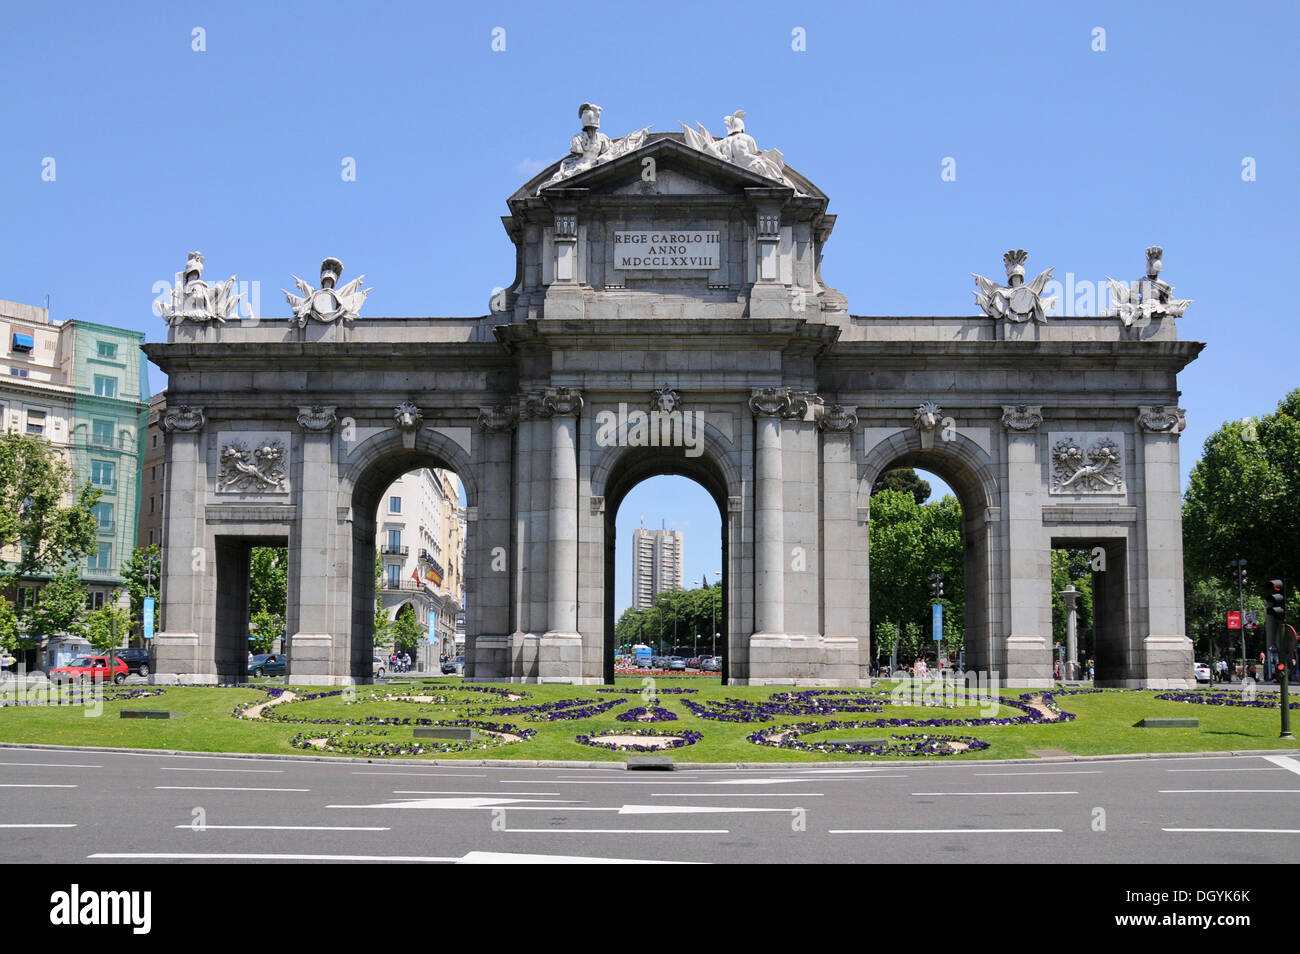 Puerta de Alcala, Plaza de la Independencia, historic centre of Madrid, Castile, Spain, Europe, PublicGround Stock Photo